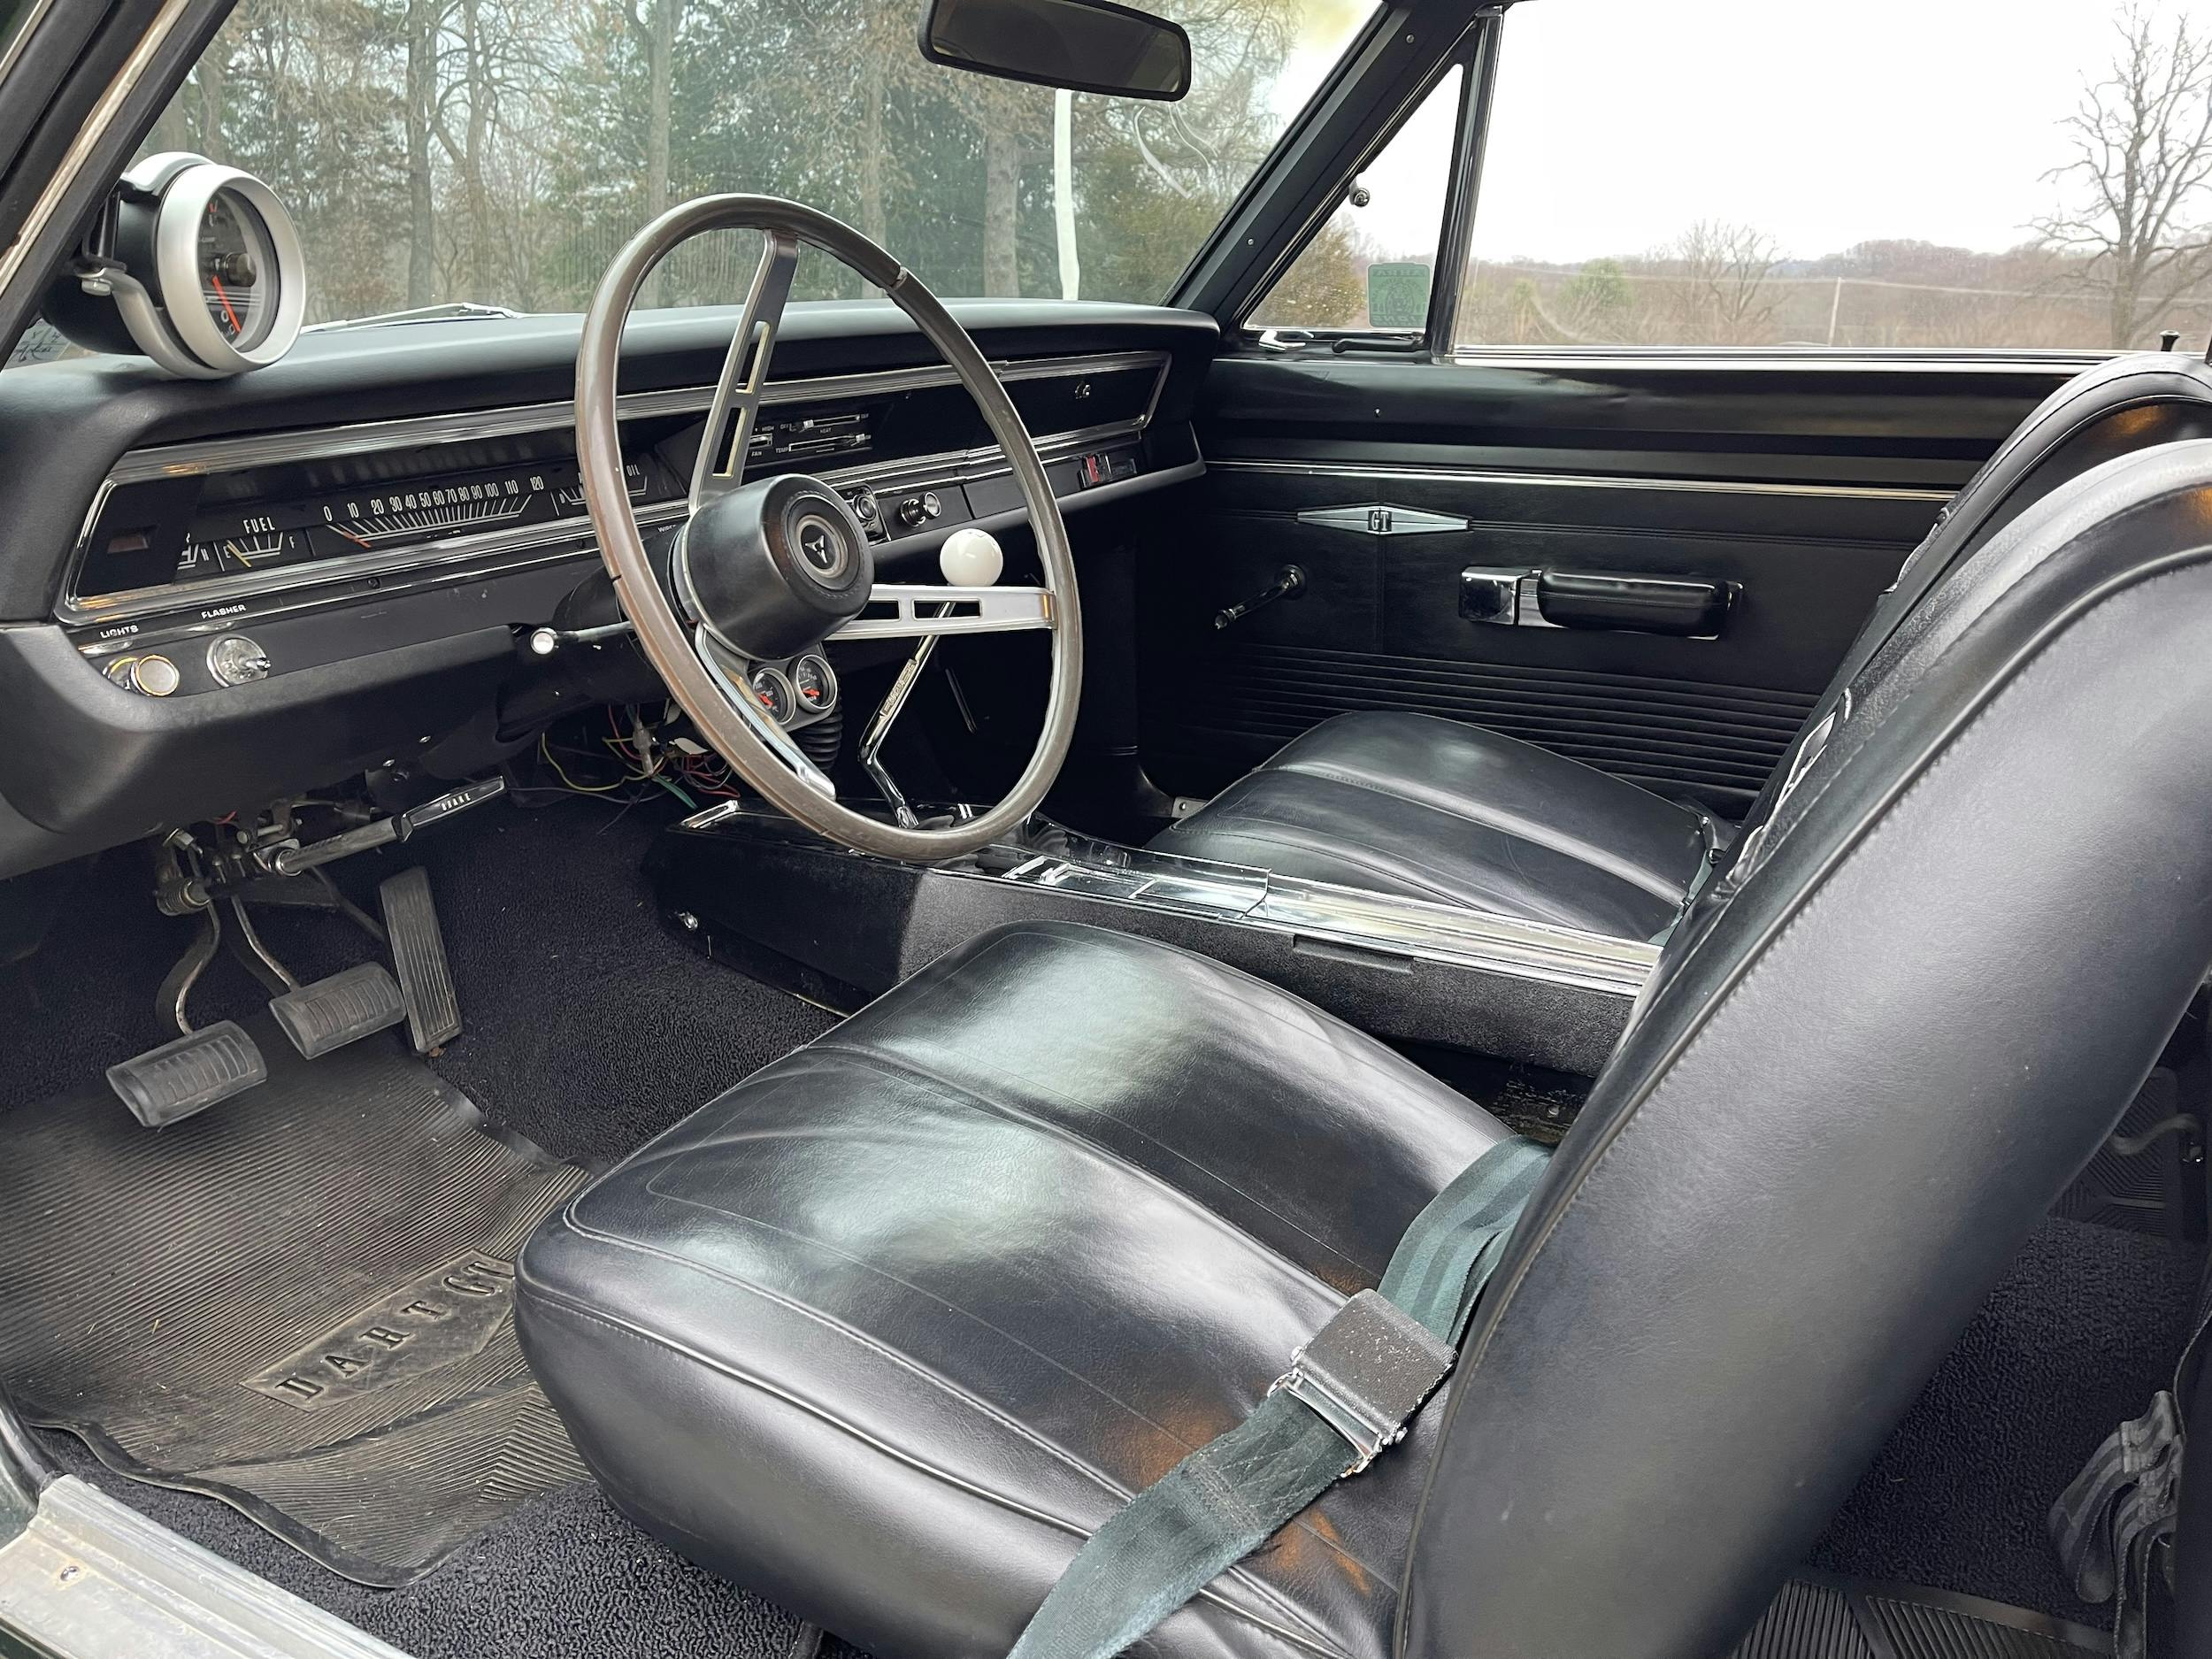 1968 Dodge Dart GT interior full angle